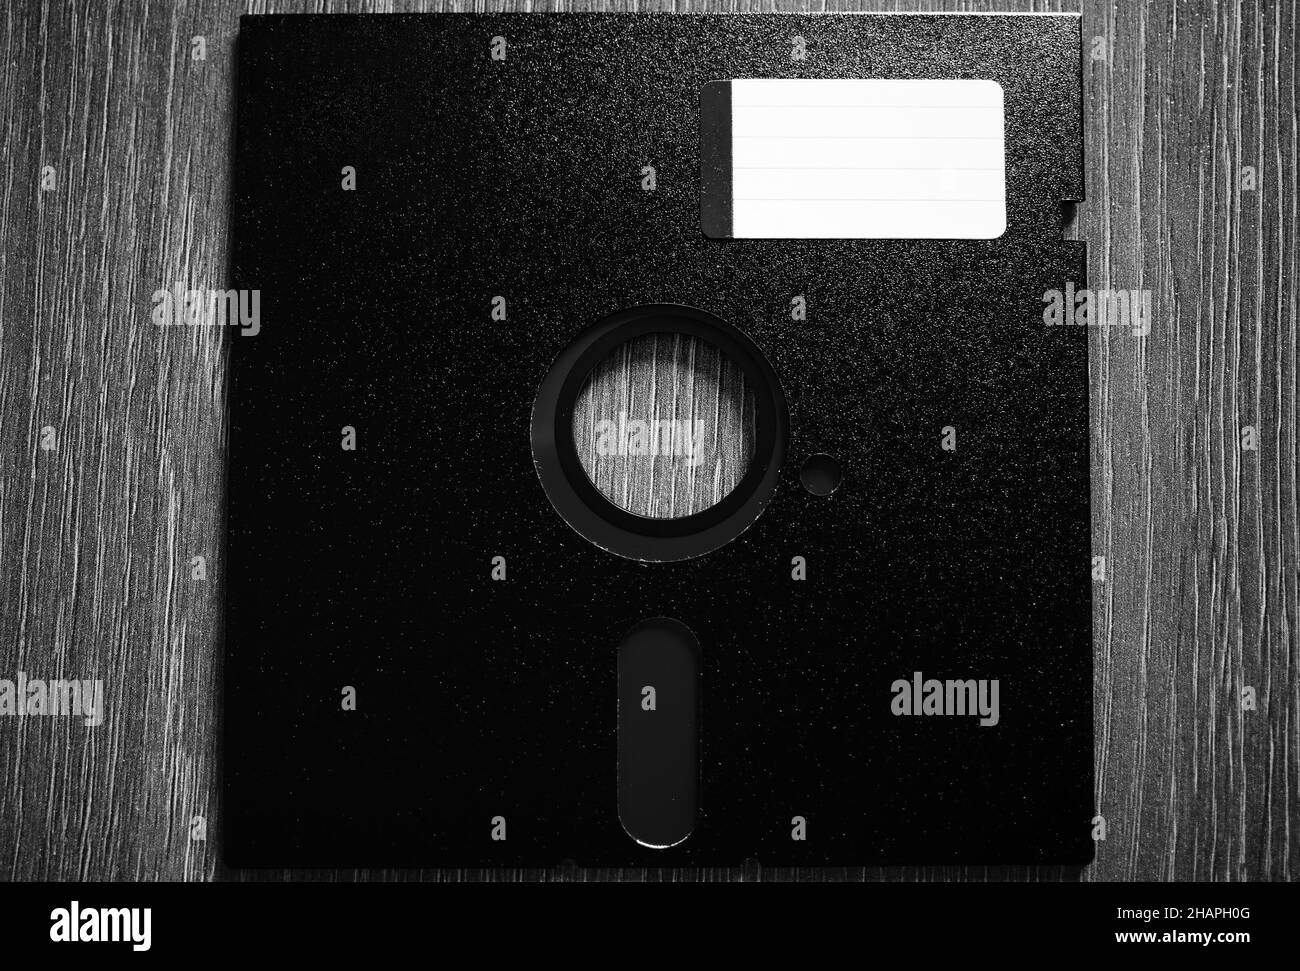 Floppy disc 5.25 inch vintage computer storage background Stock Photo